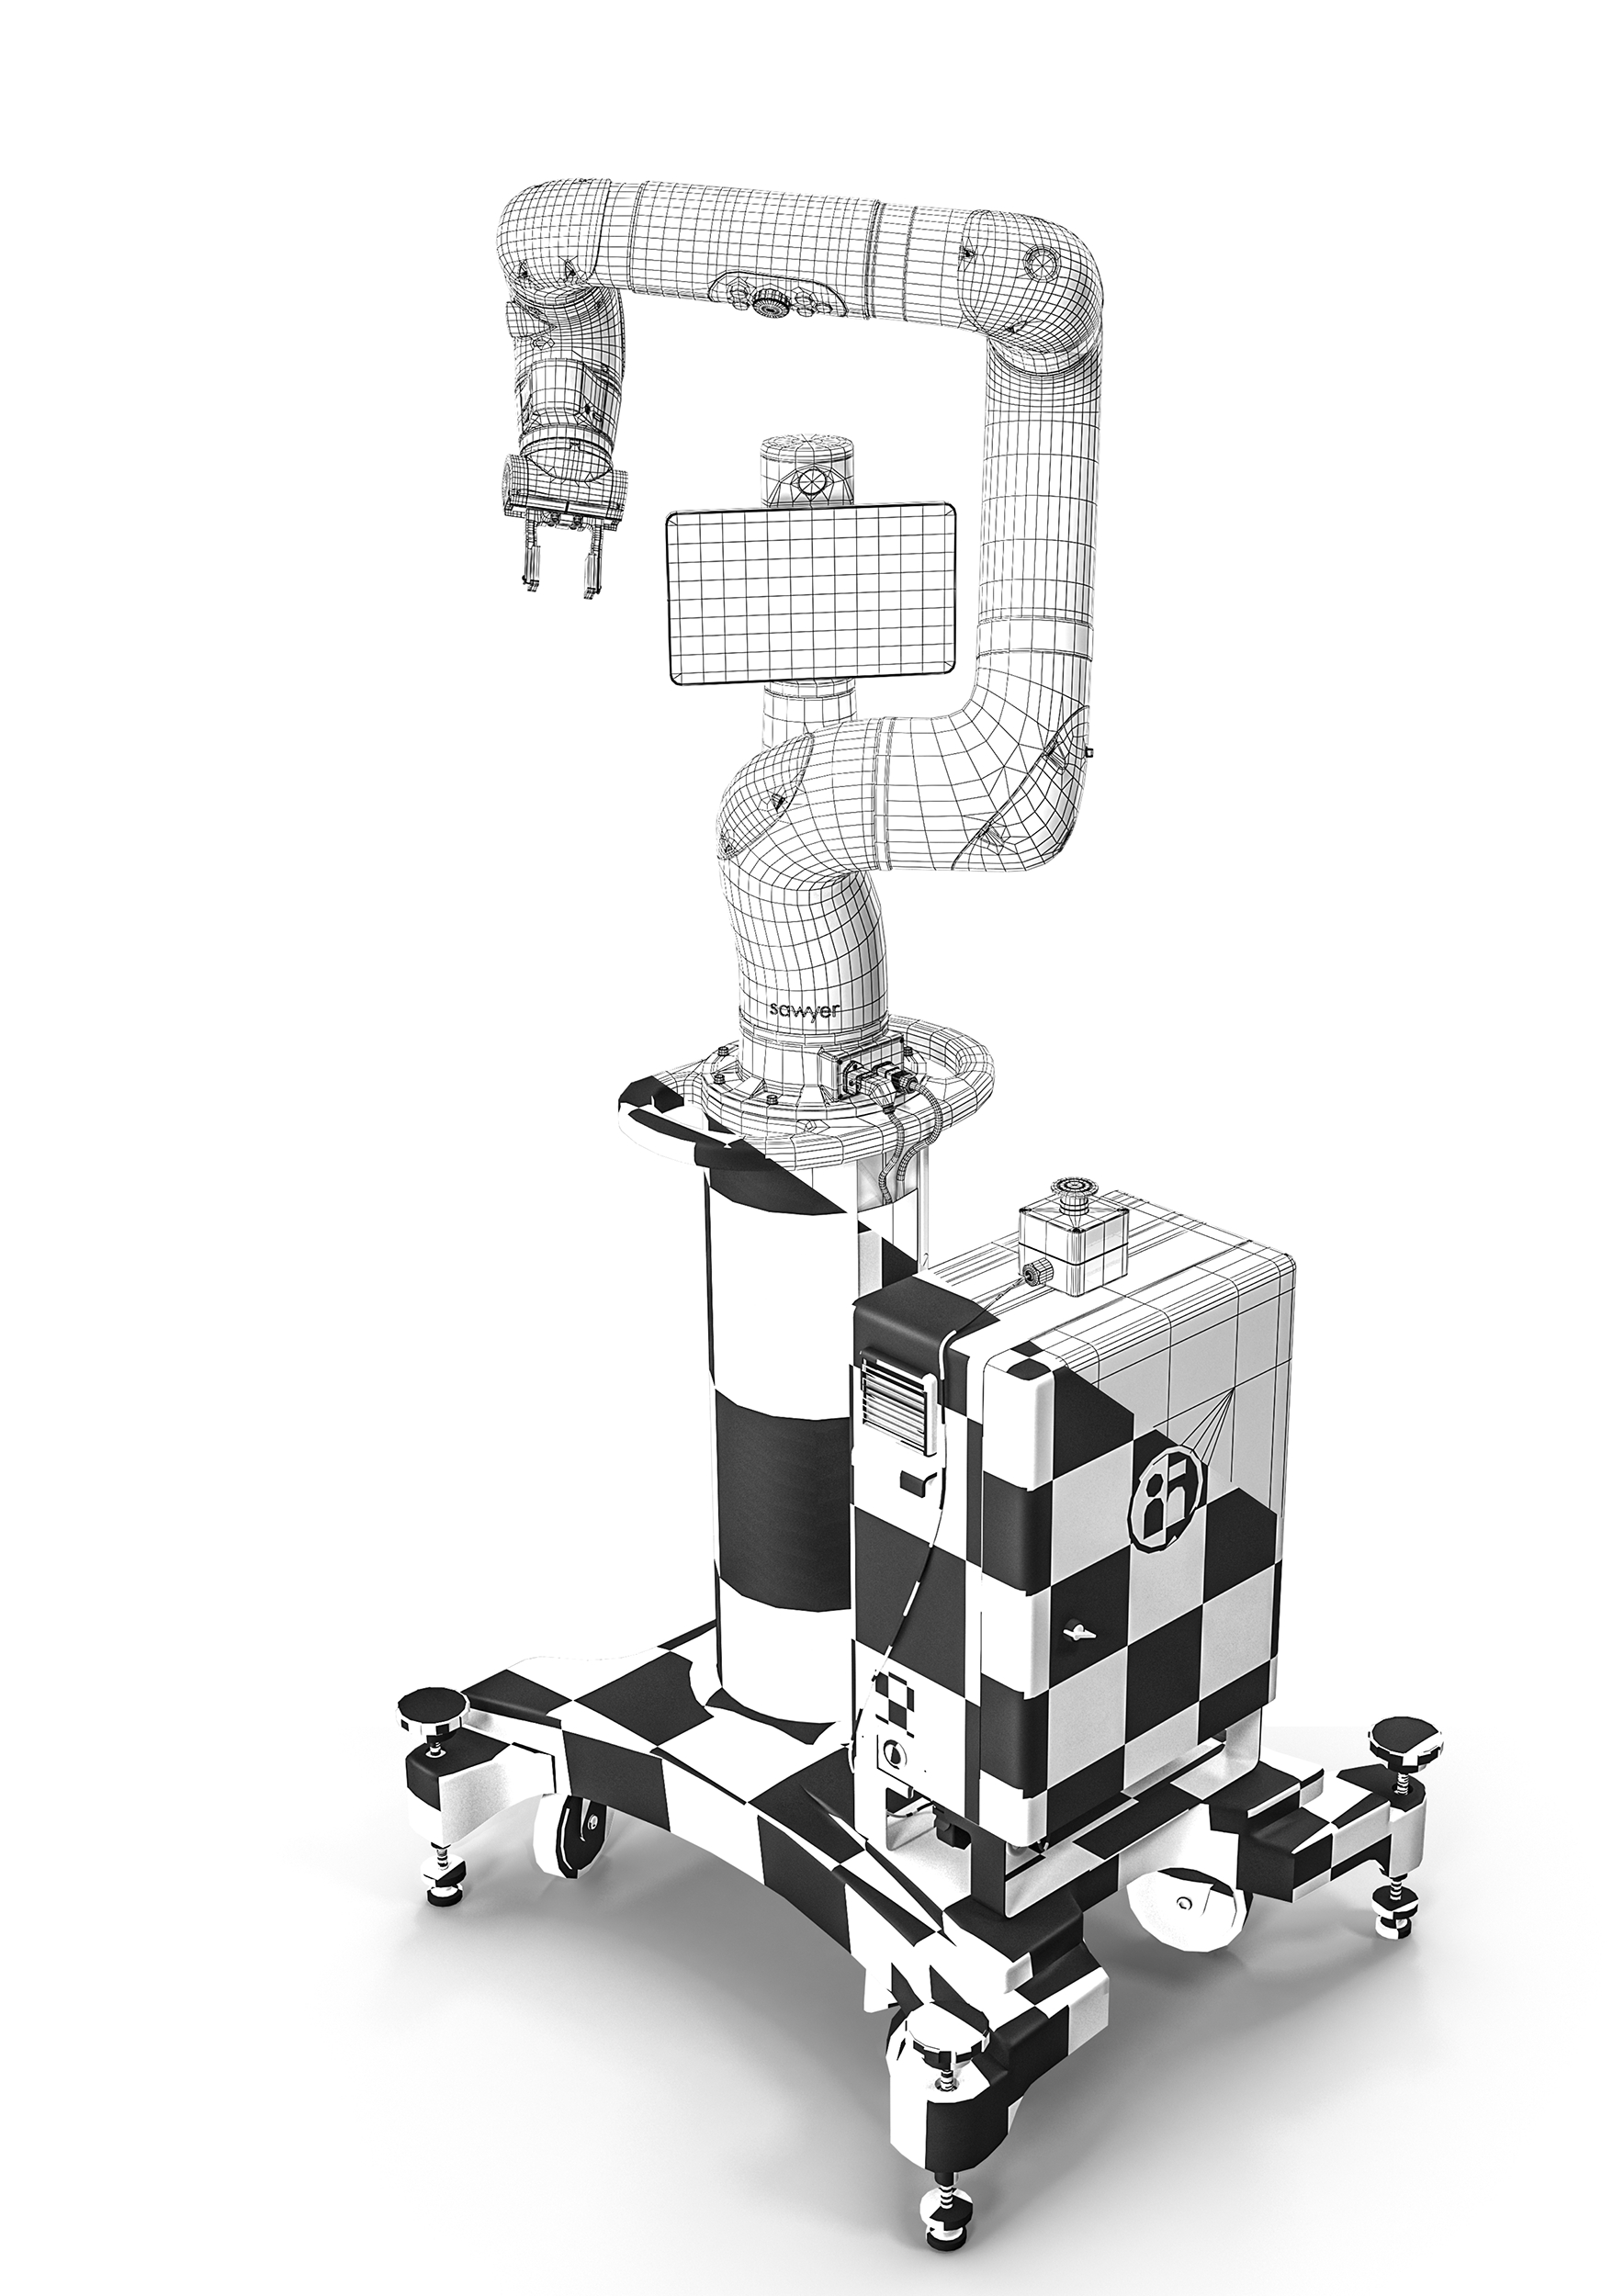 SAWYER endüstriyel robot in Cinema 4d vray 5.0 resim